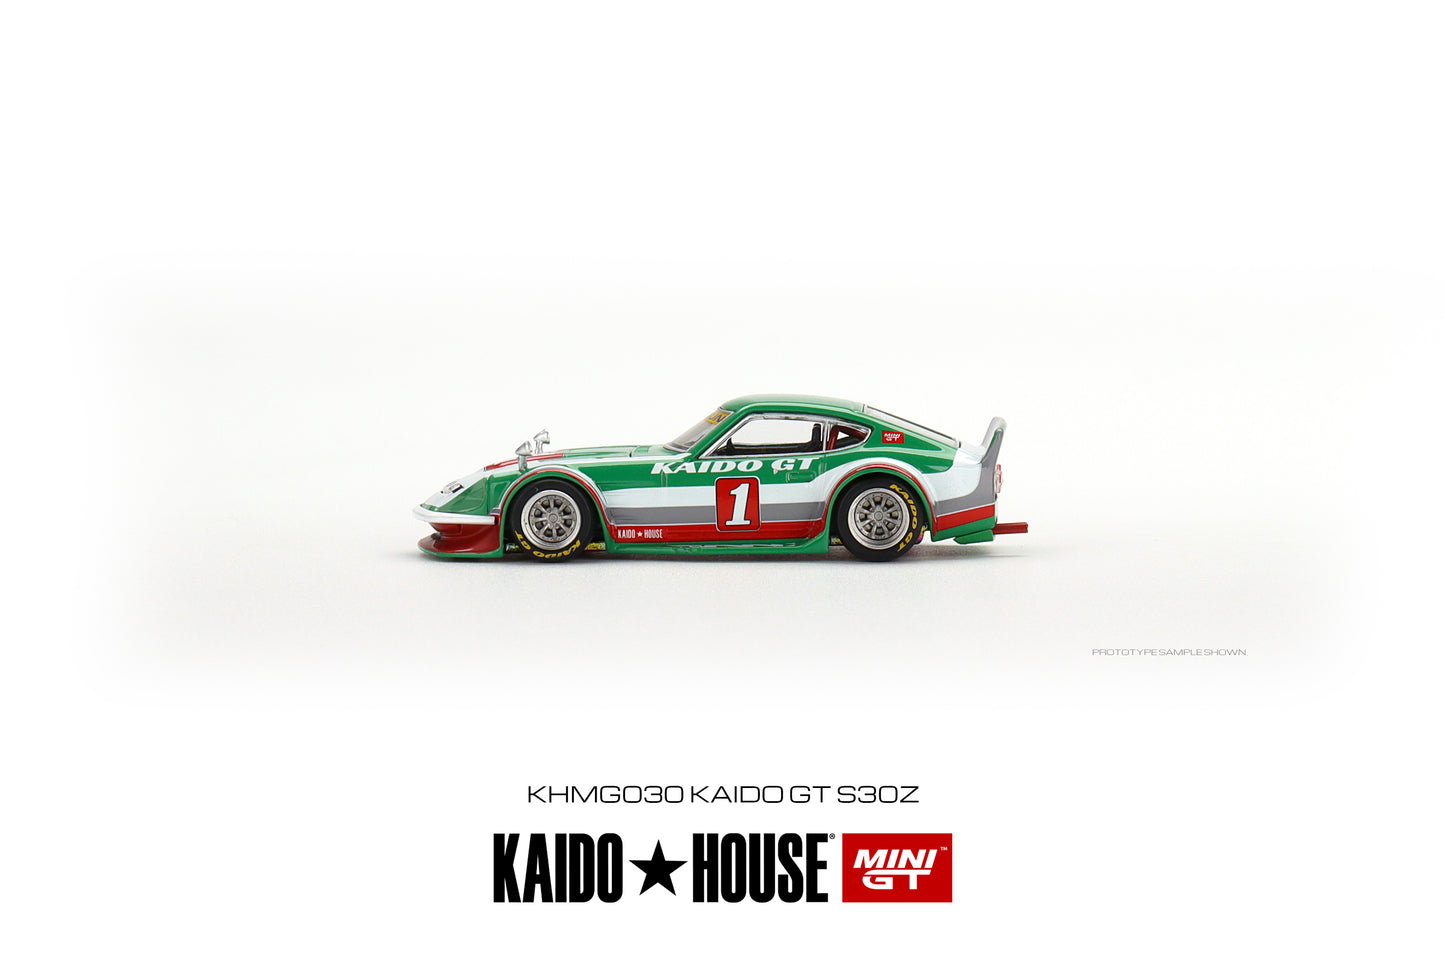 Mini GT x Kaido House 1/64 Nissan Fairlady Z Kaido GT V2